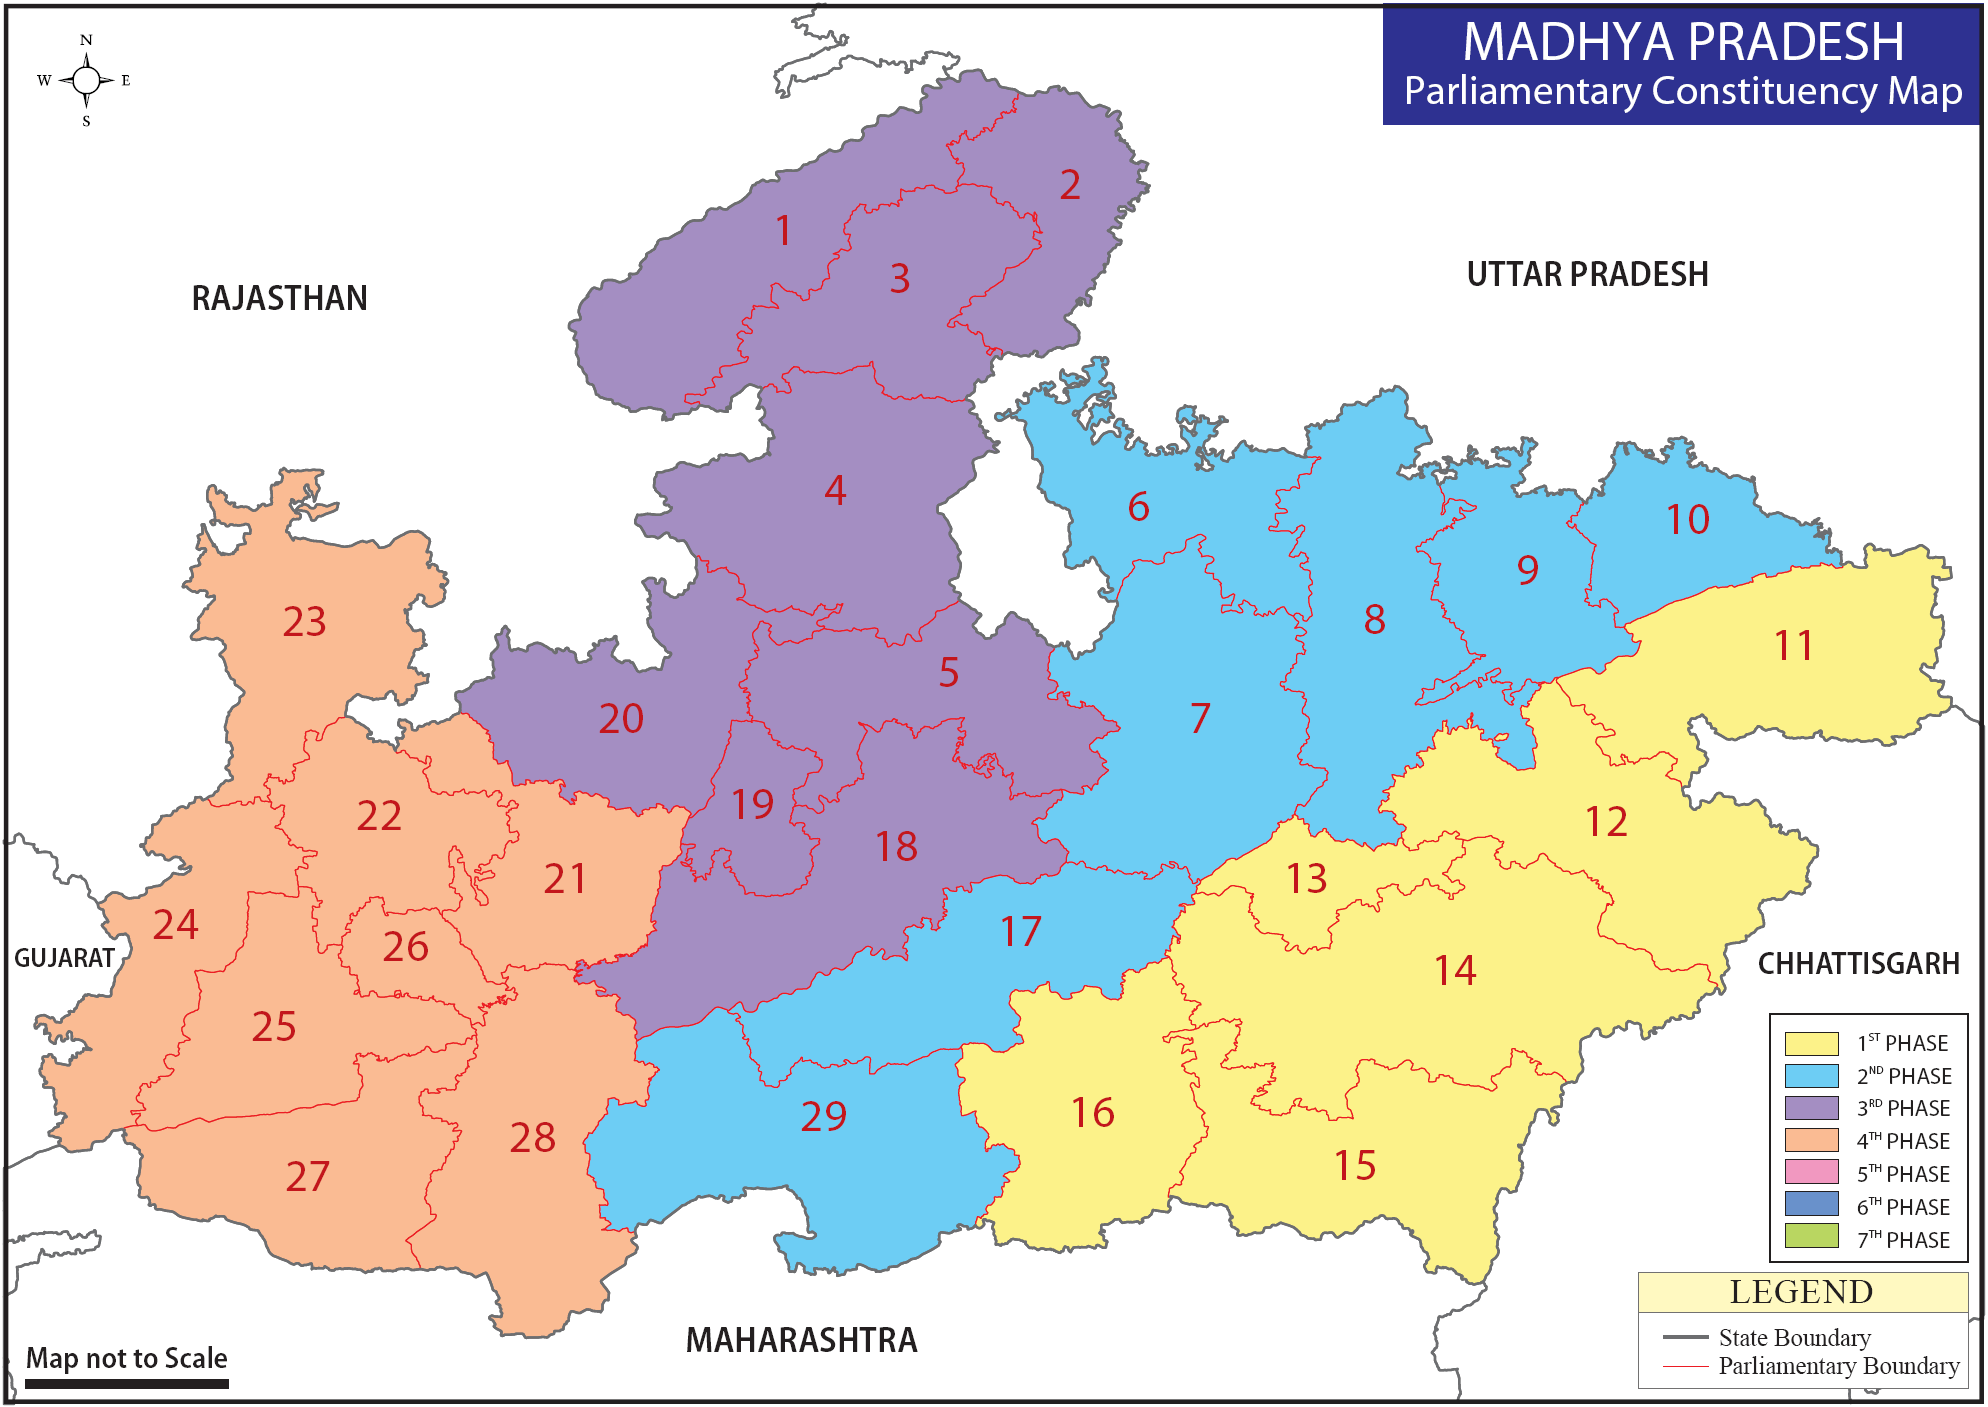 Madhya Pradesh Parliamentary Constituency Map